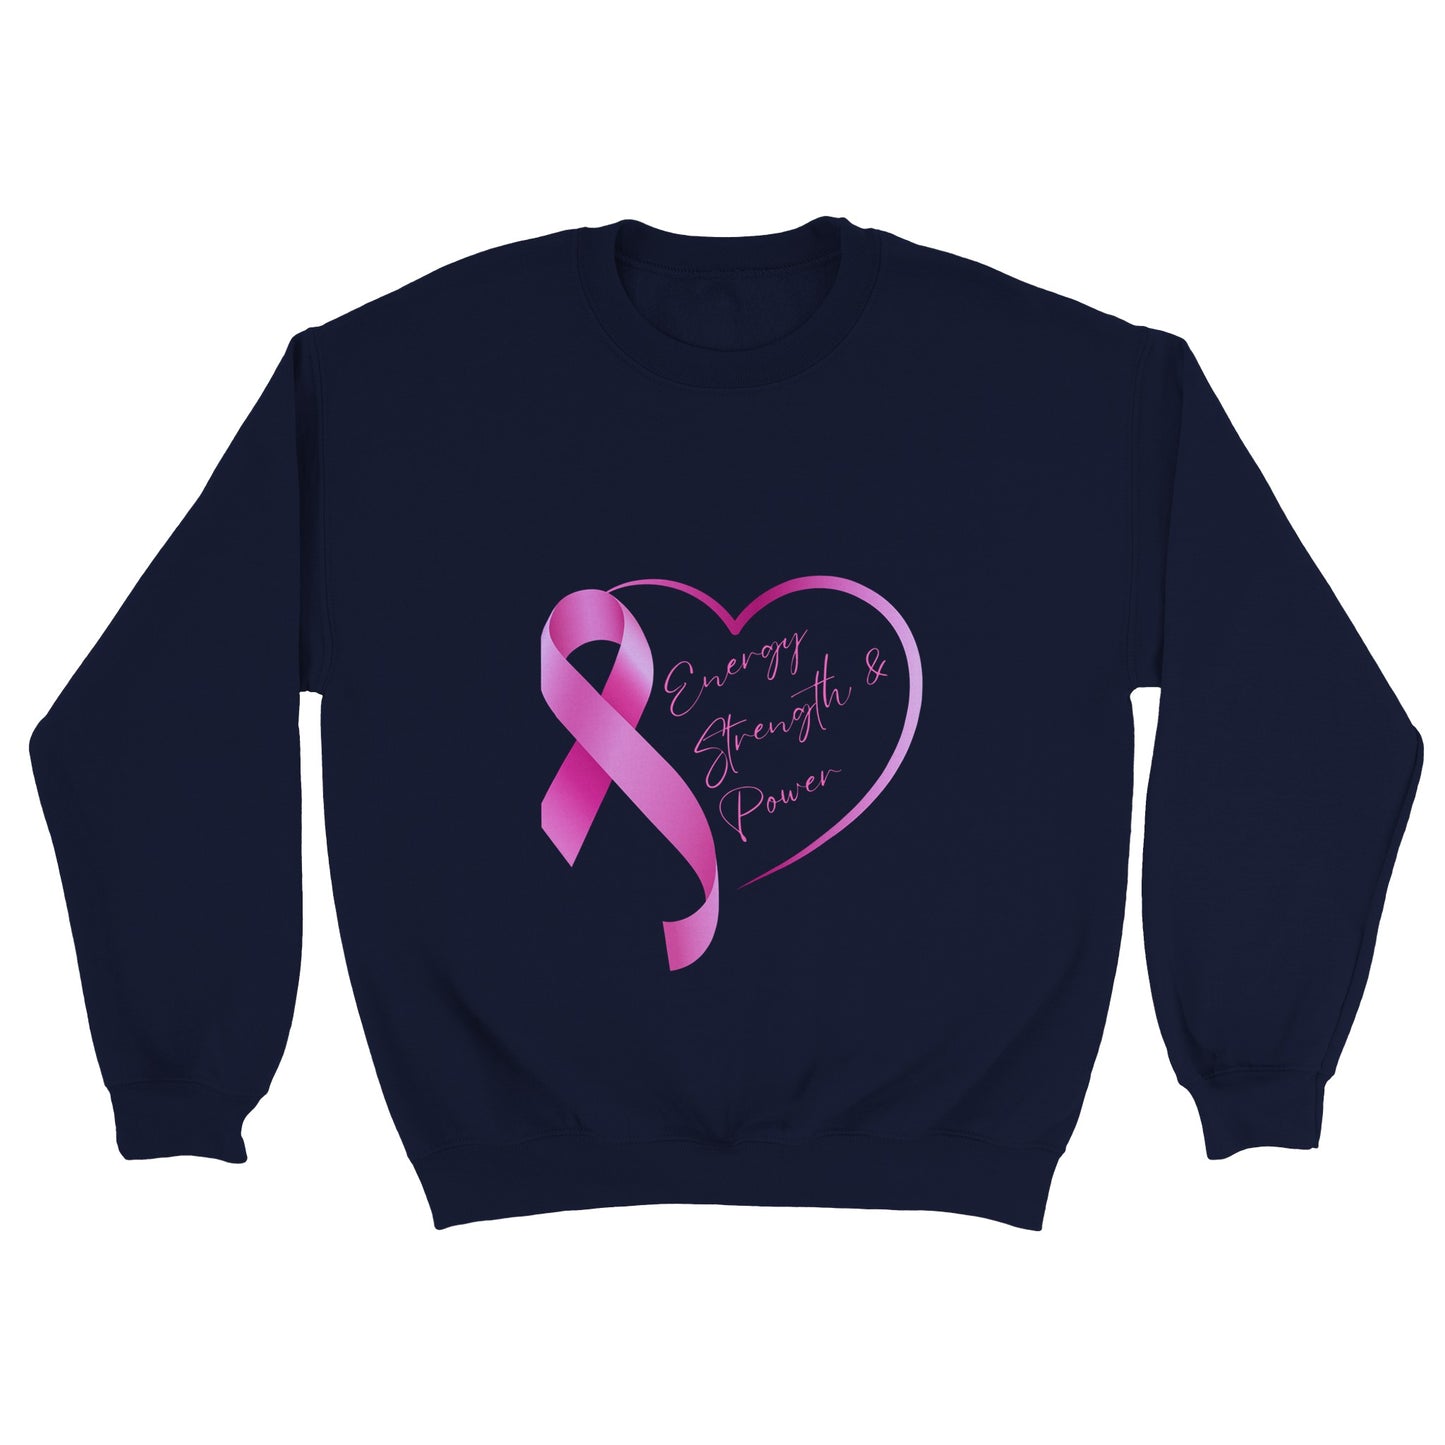 Support Breast Cancer ESP Classic Unisex Crewneck Sweatshirt